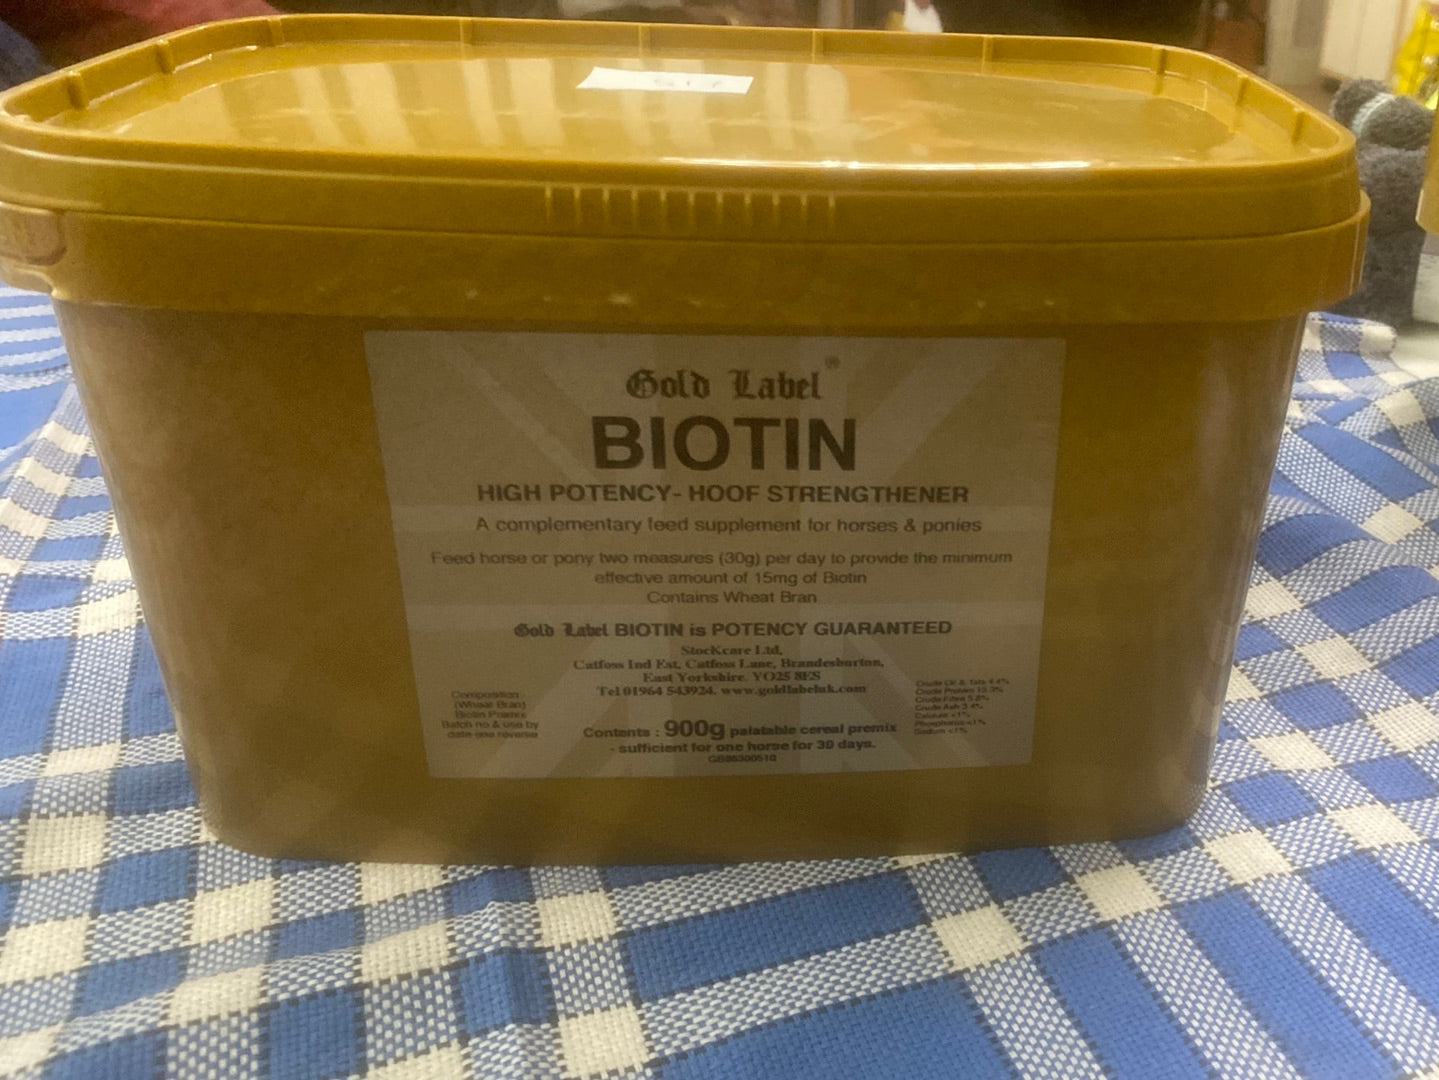 New gold label biotin hoof strengthener 900g FREE POSTAGE🟢